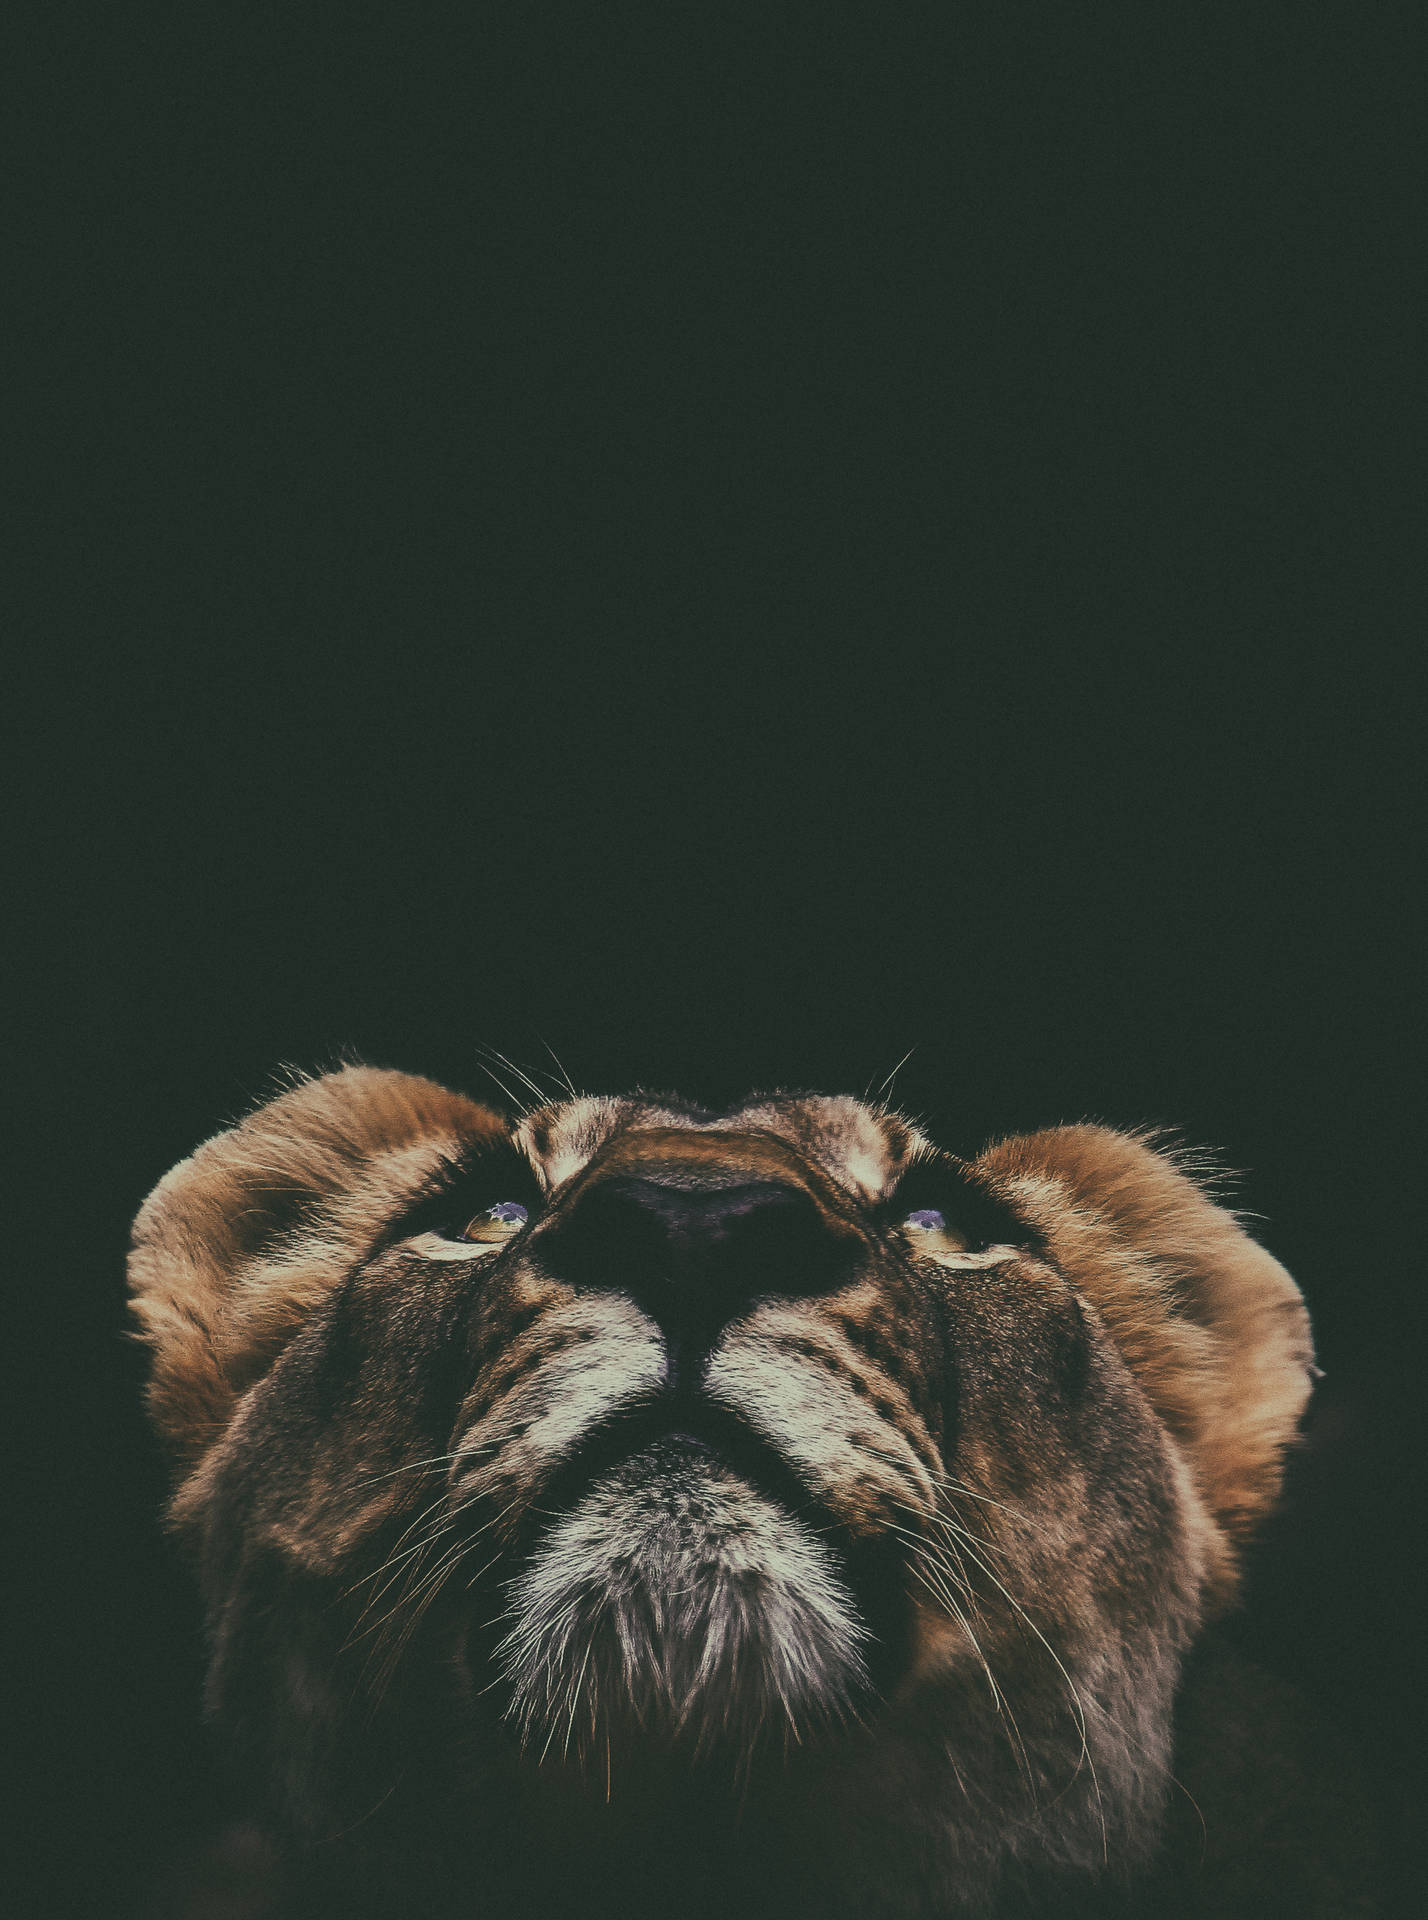 Lion Cub Portrait From Below